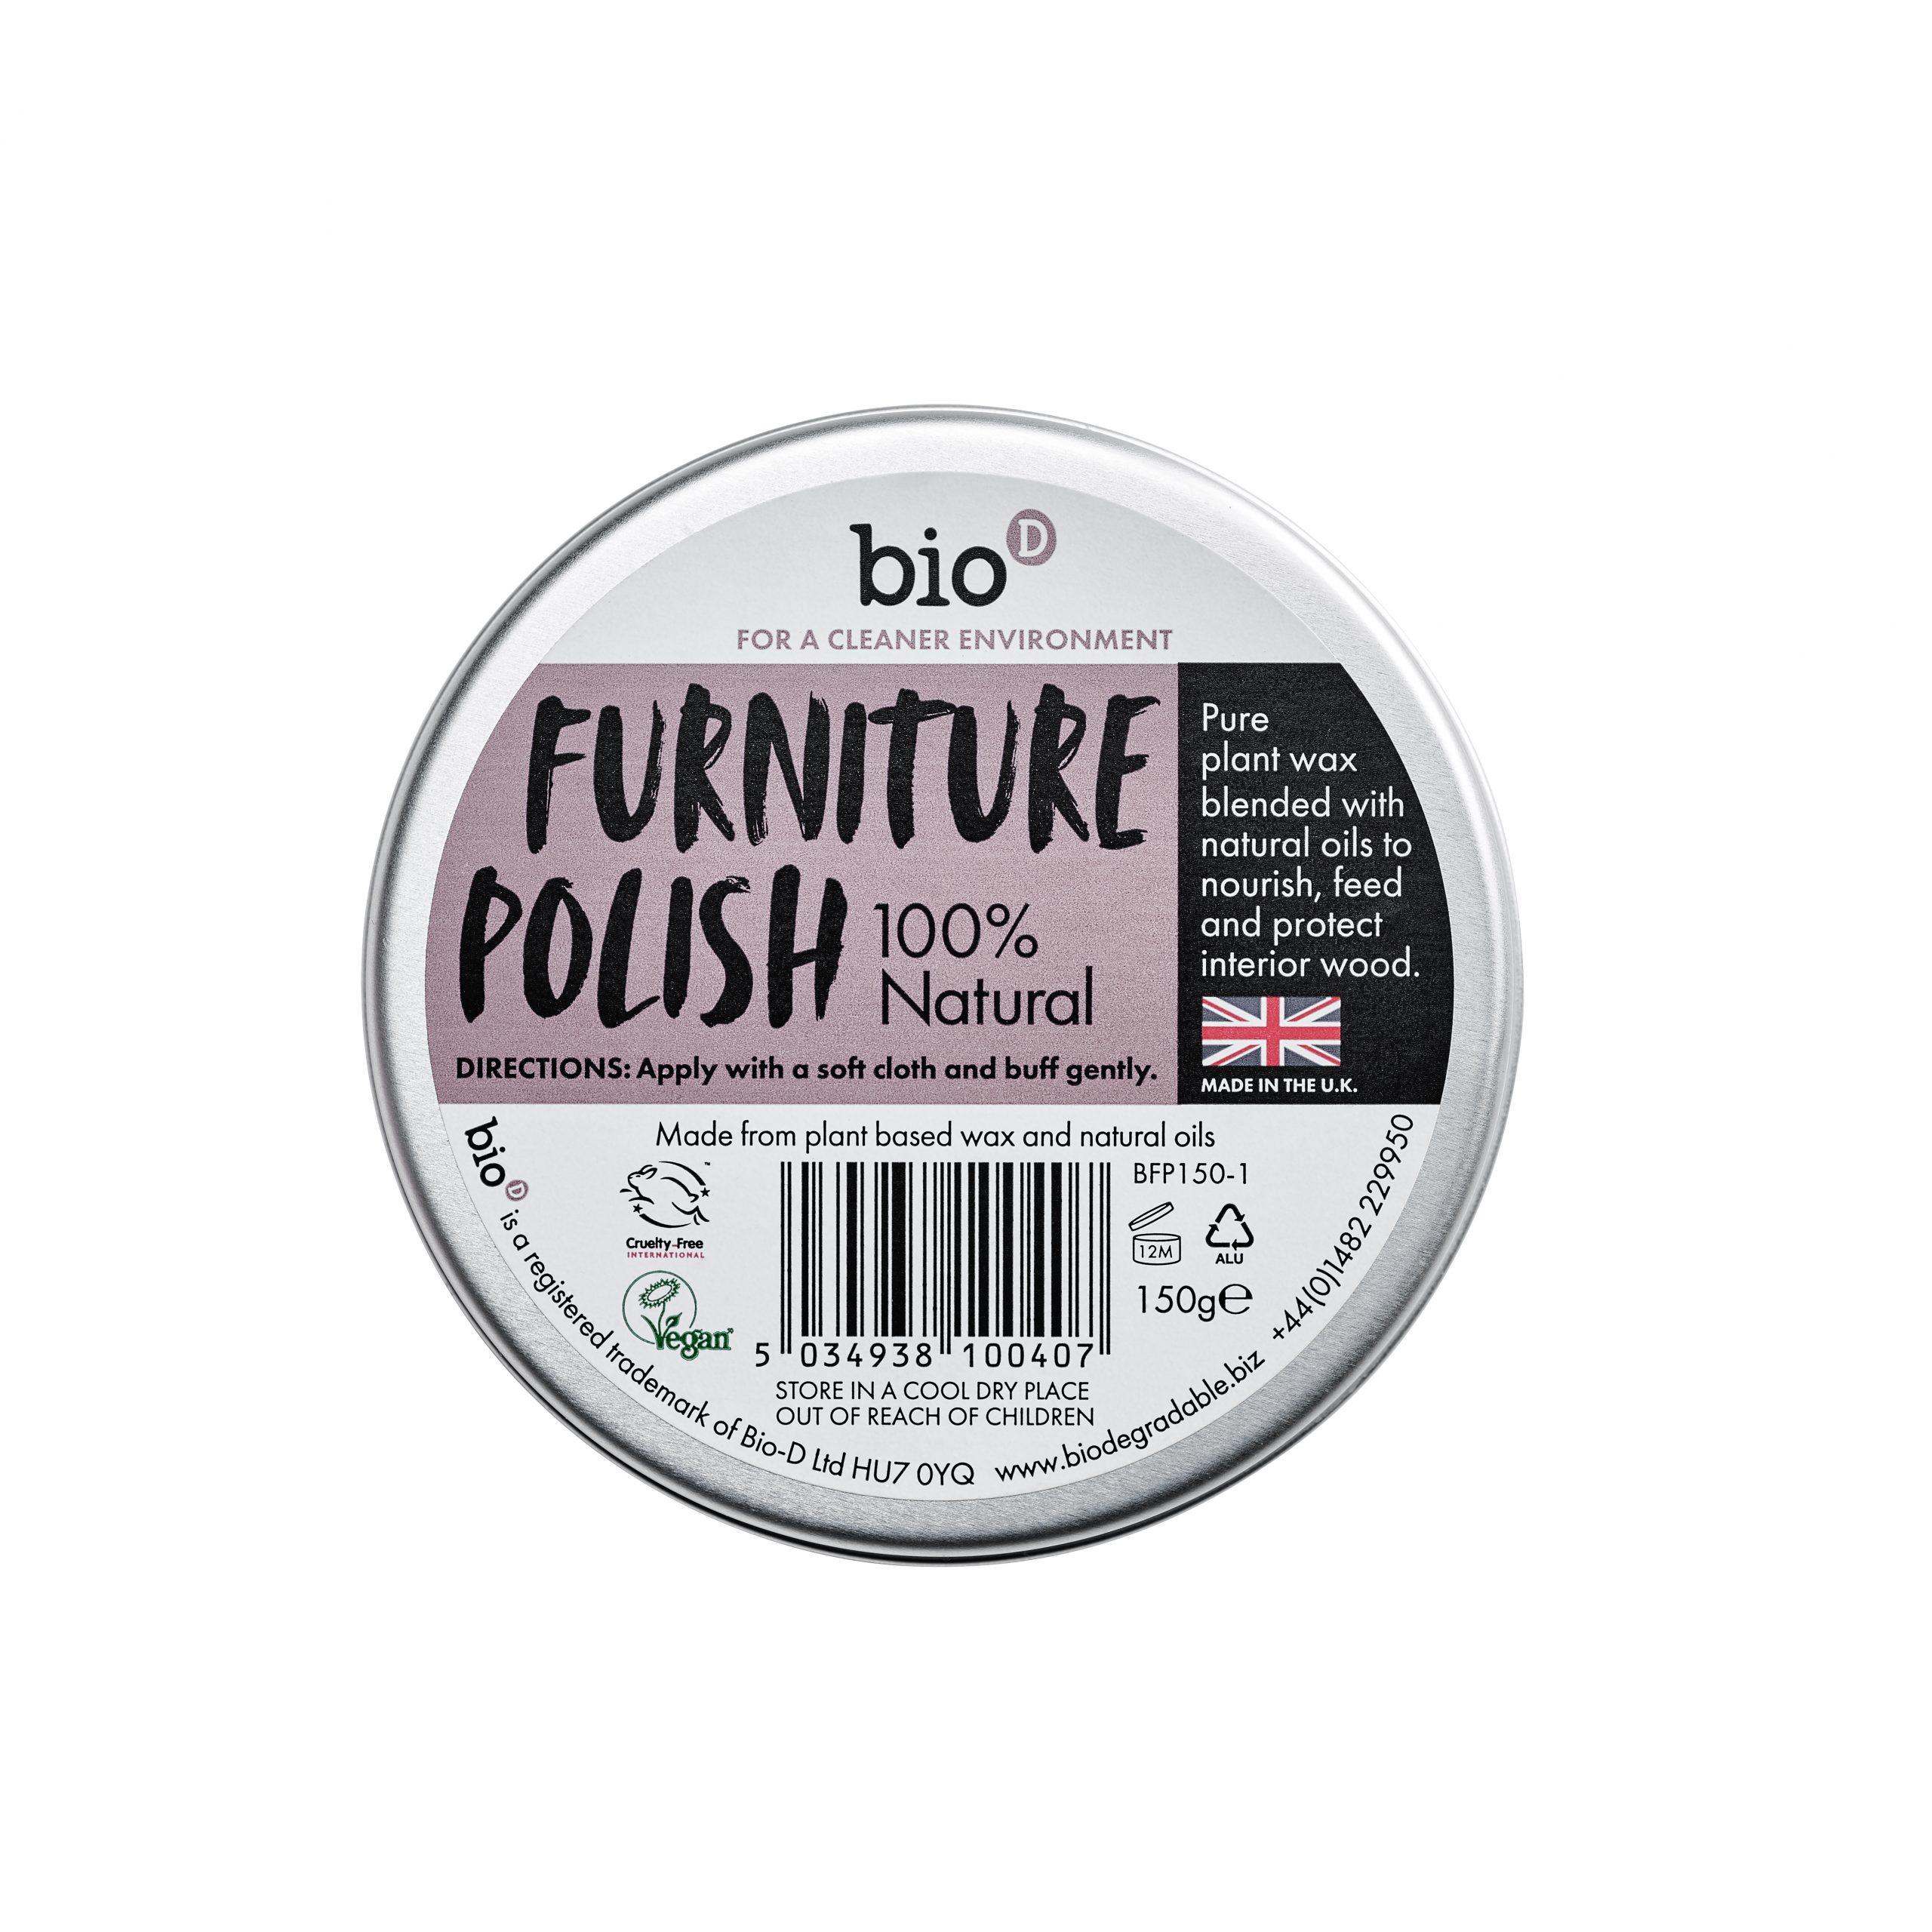 Bio-d furniture polish in a tin